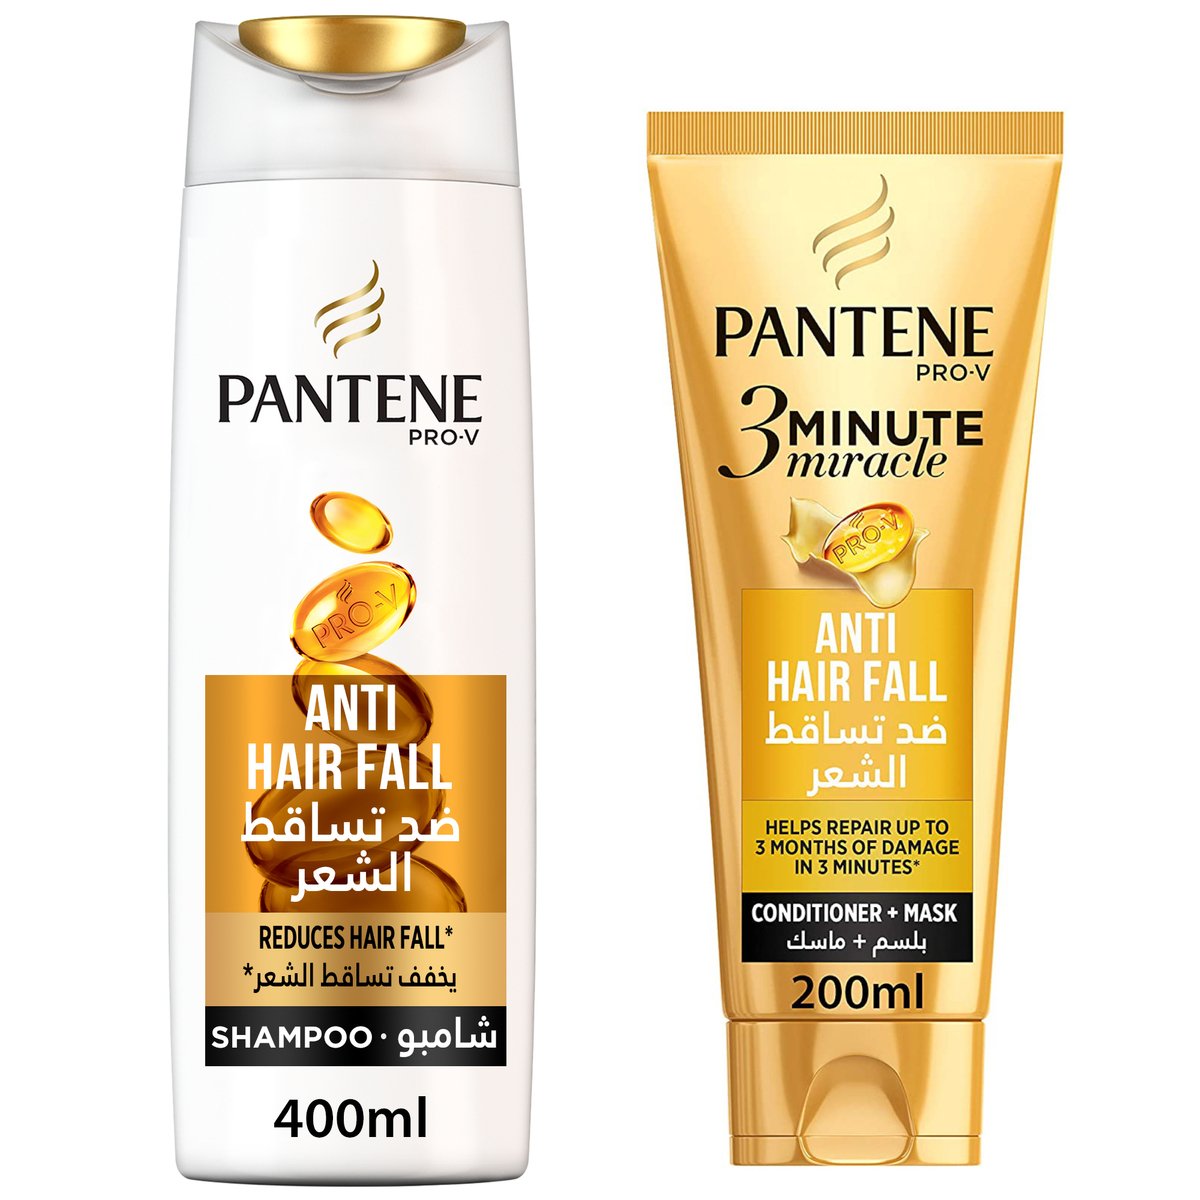 Pantene Pro-V 3 Minute Miracle Anti-Hair Fall Conditioner + Mask 200 ml & Pantene Pro-V Anti-Hair Fall Shampoo 400 ml